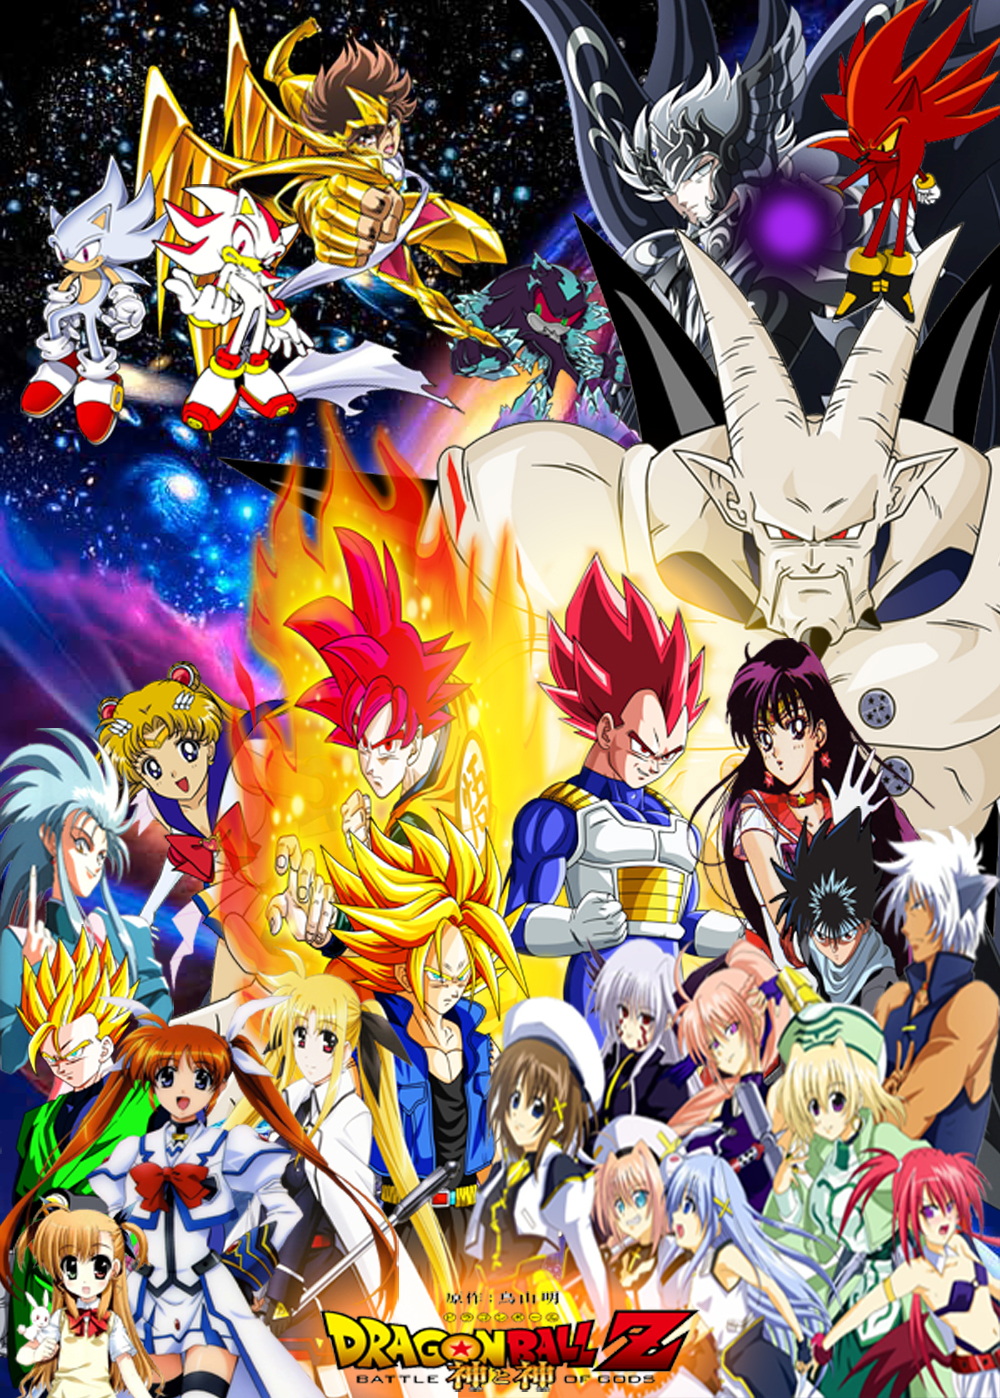 Dragon Ball Z Online Card Game Battle Of Gods 4 by DEMONHERO90 on DeviantArt